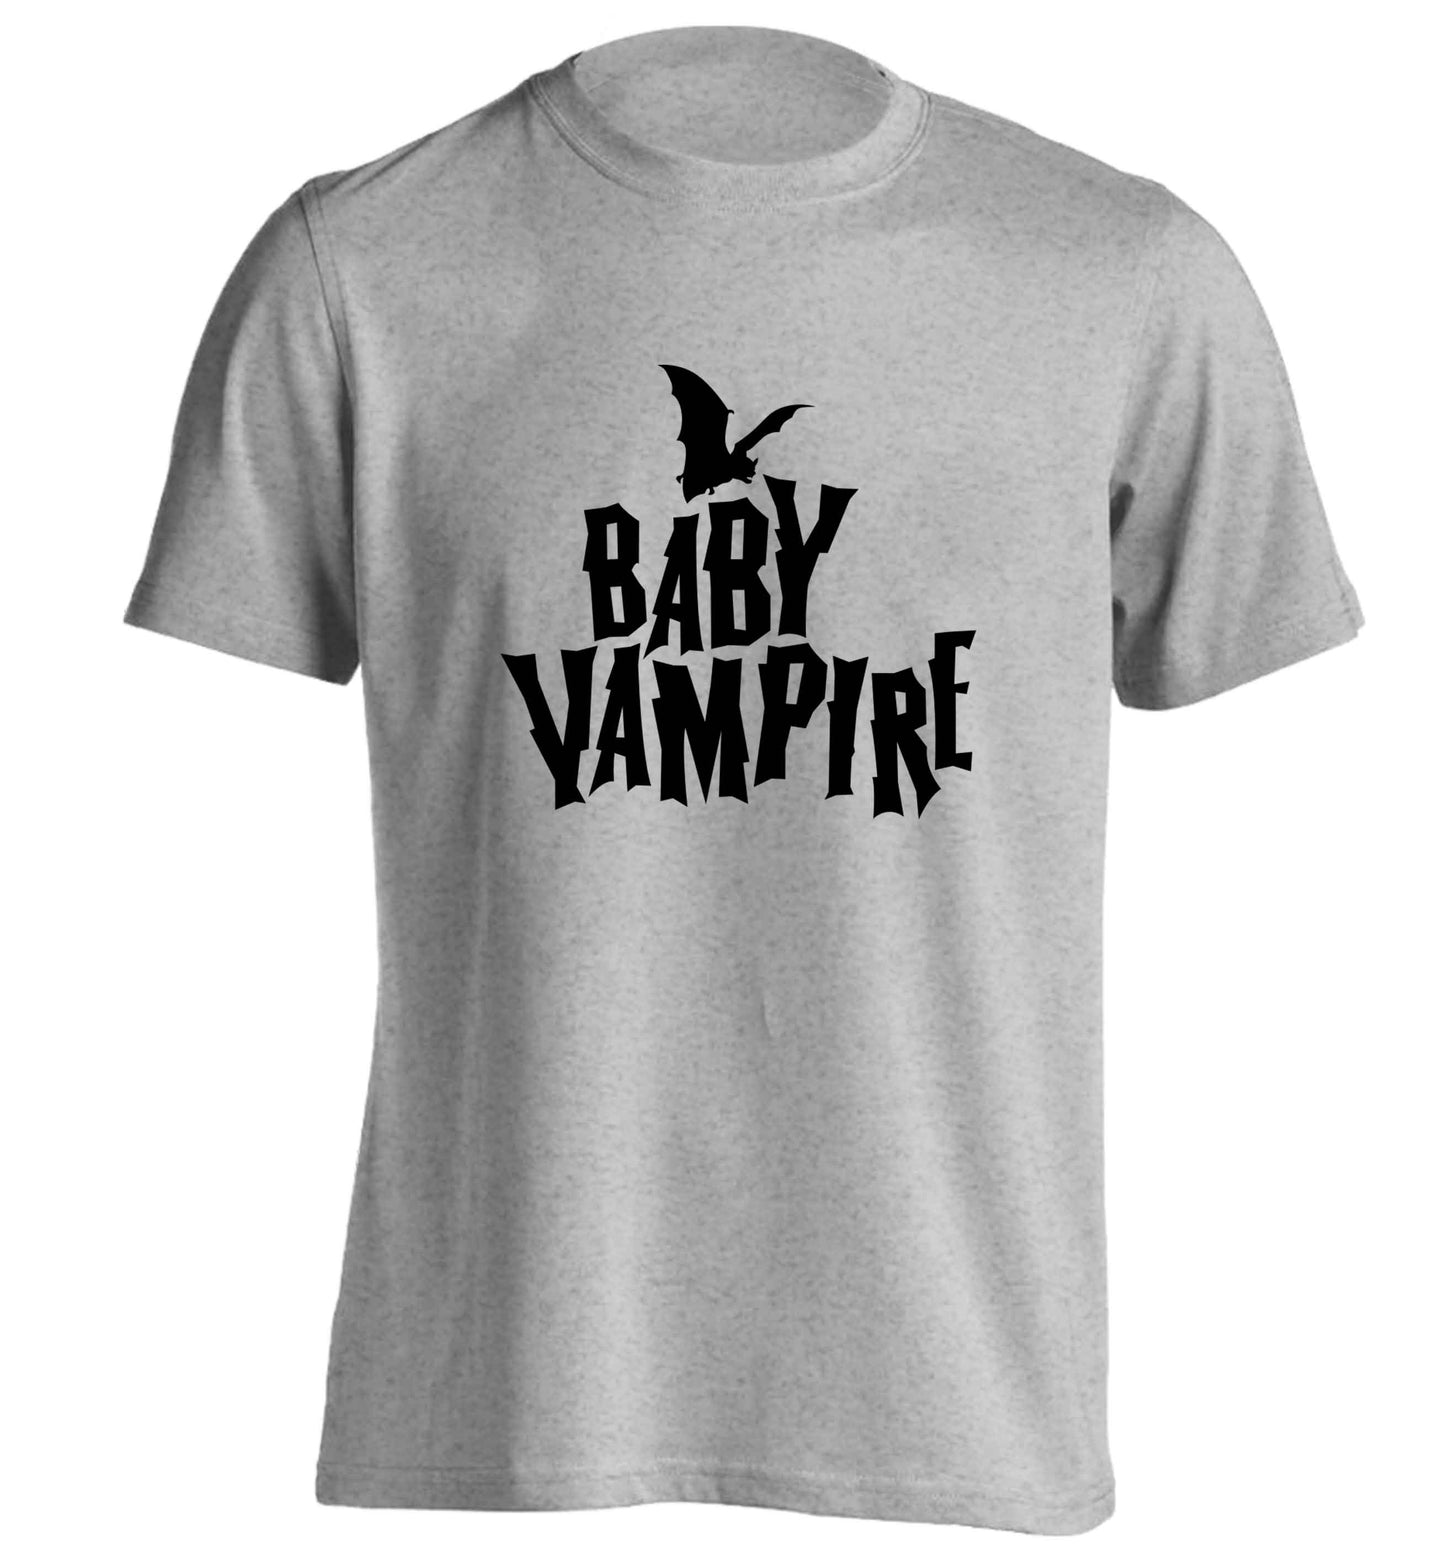 Baby vampire adults unisex grey Tshirt 2XL